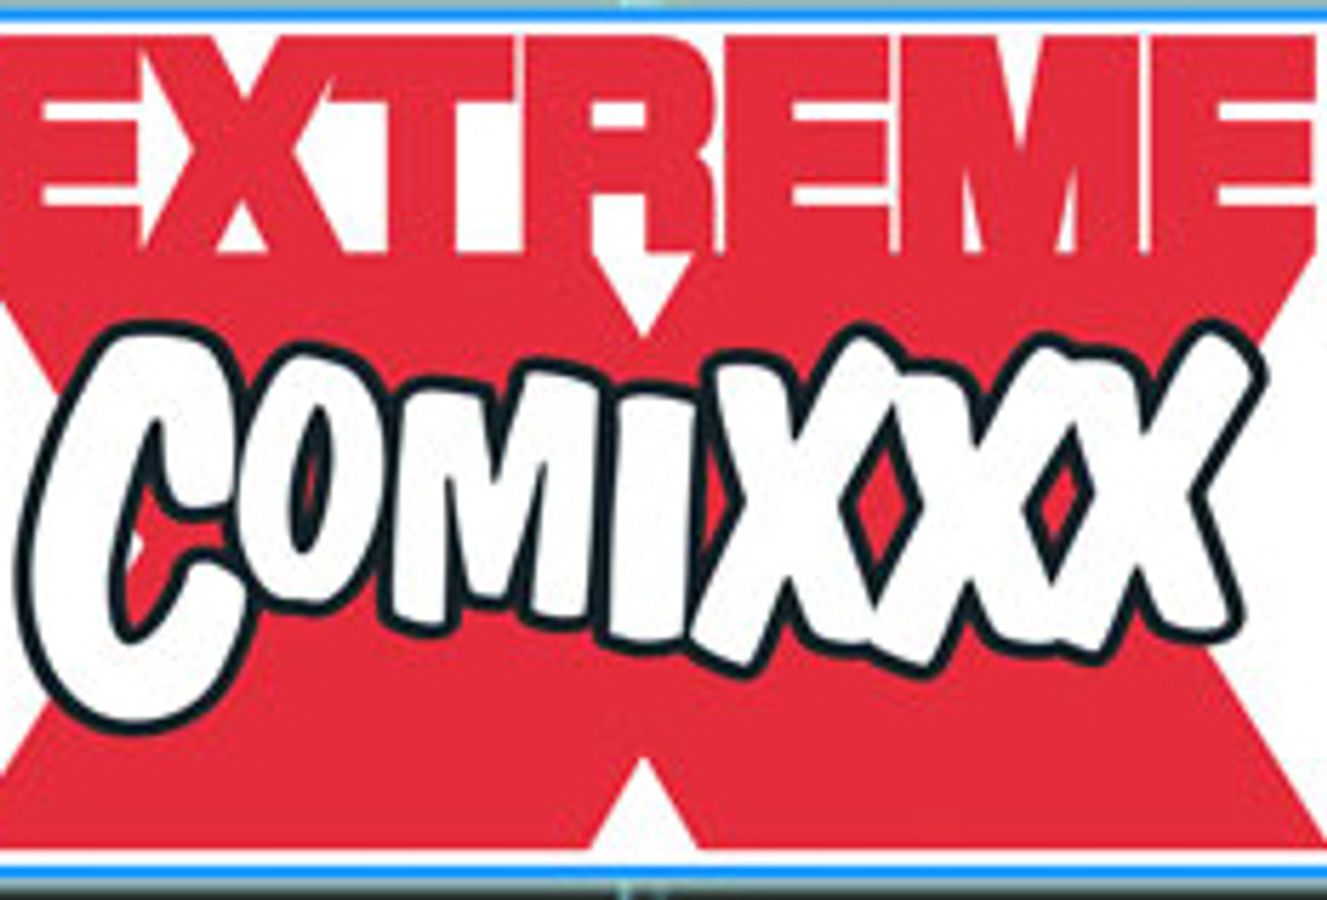 Extreme Comixxx